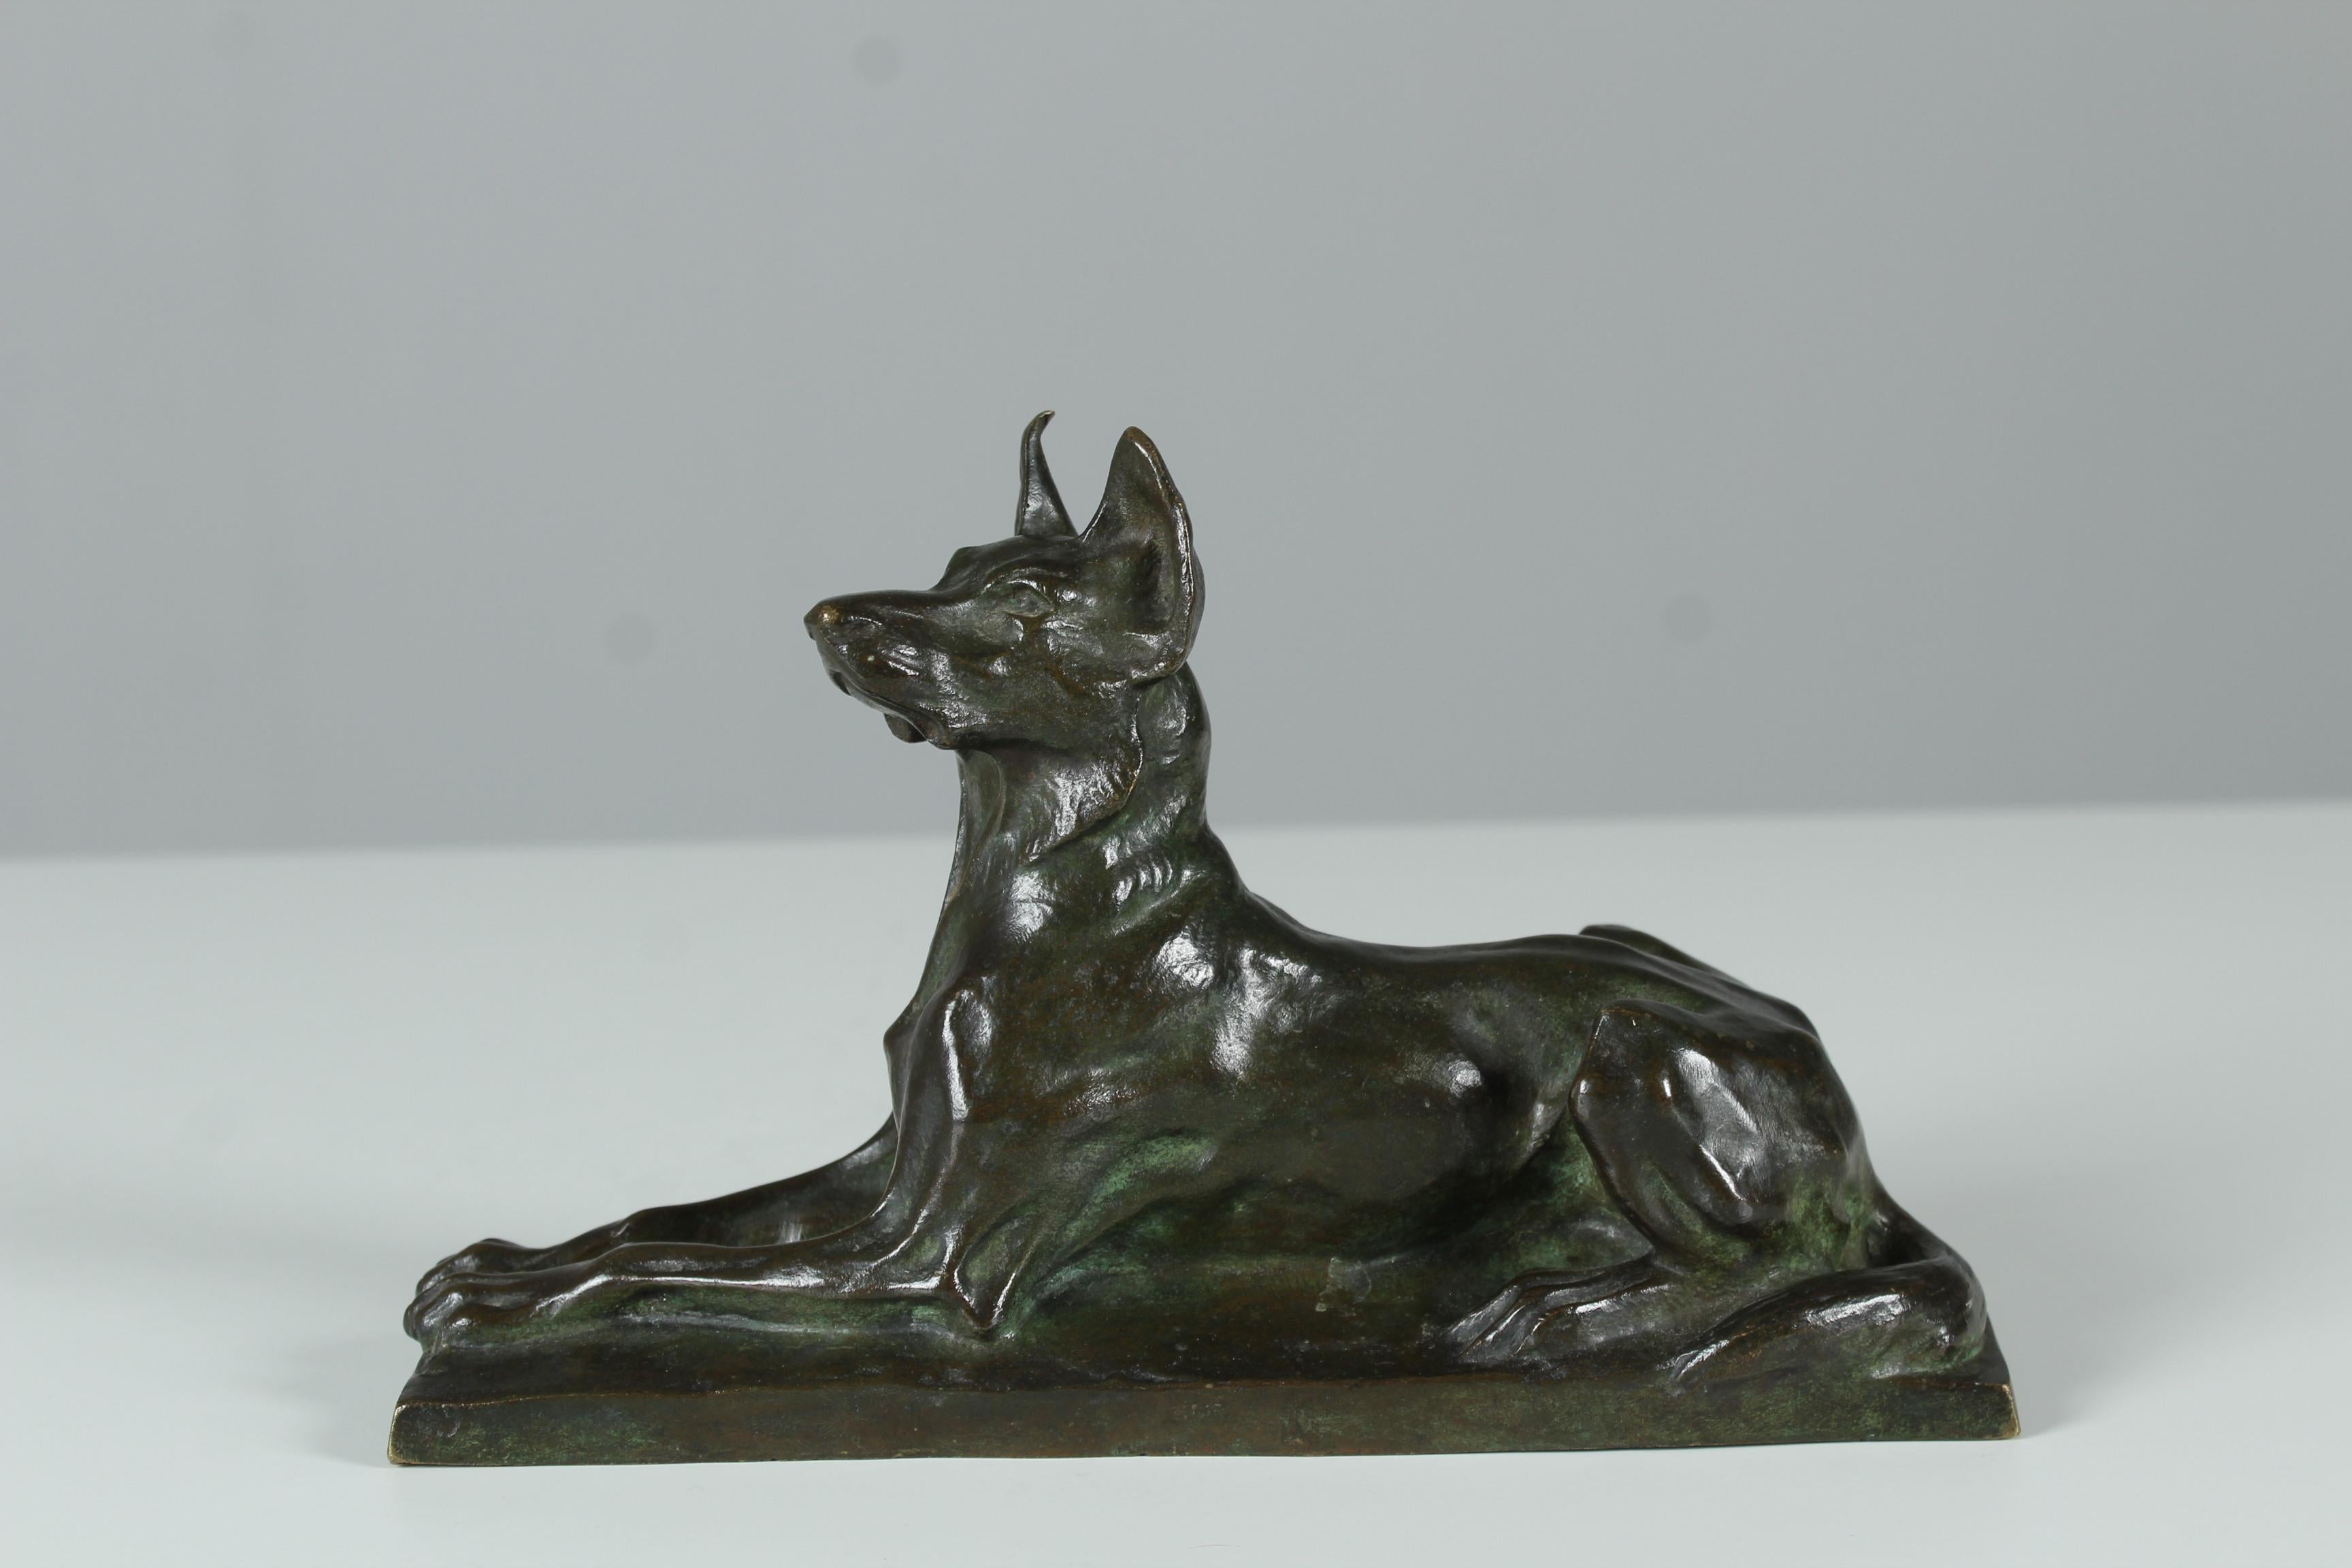 Antique Shepherd Dog Sculpture, Signed by Artist 